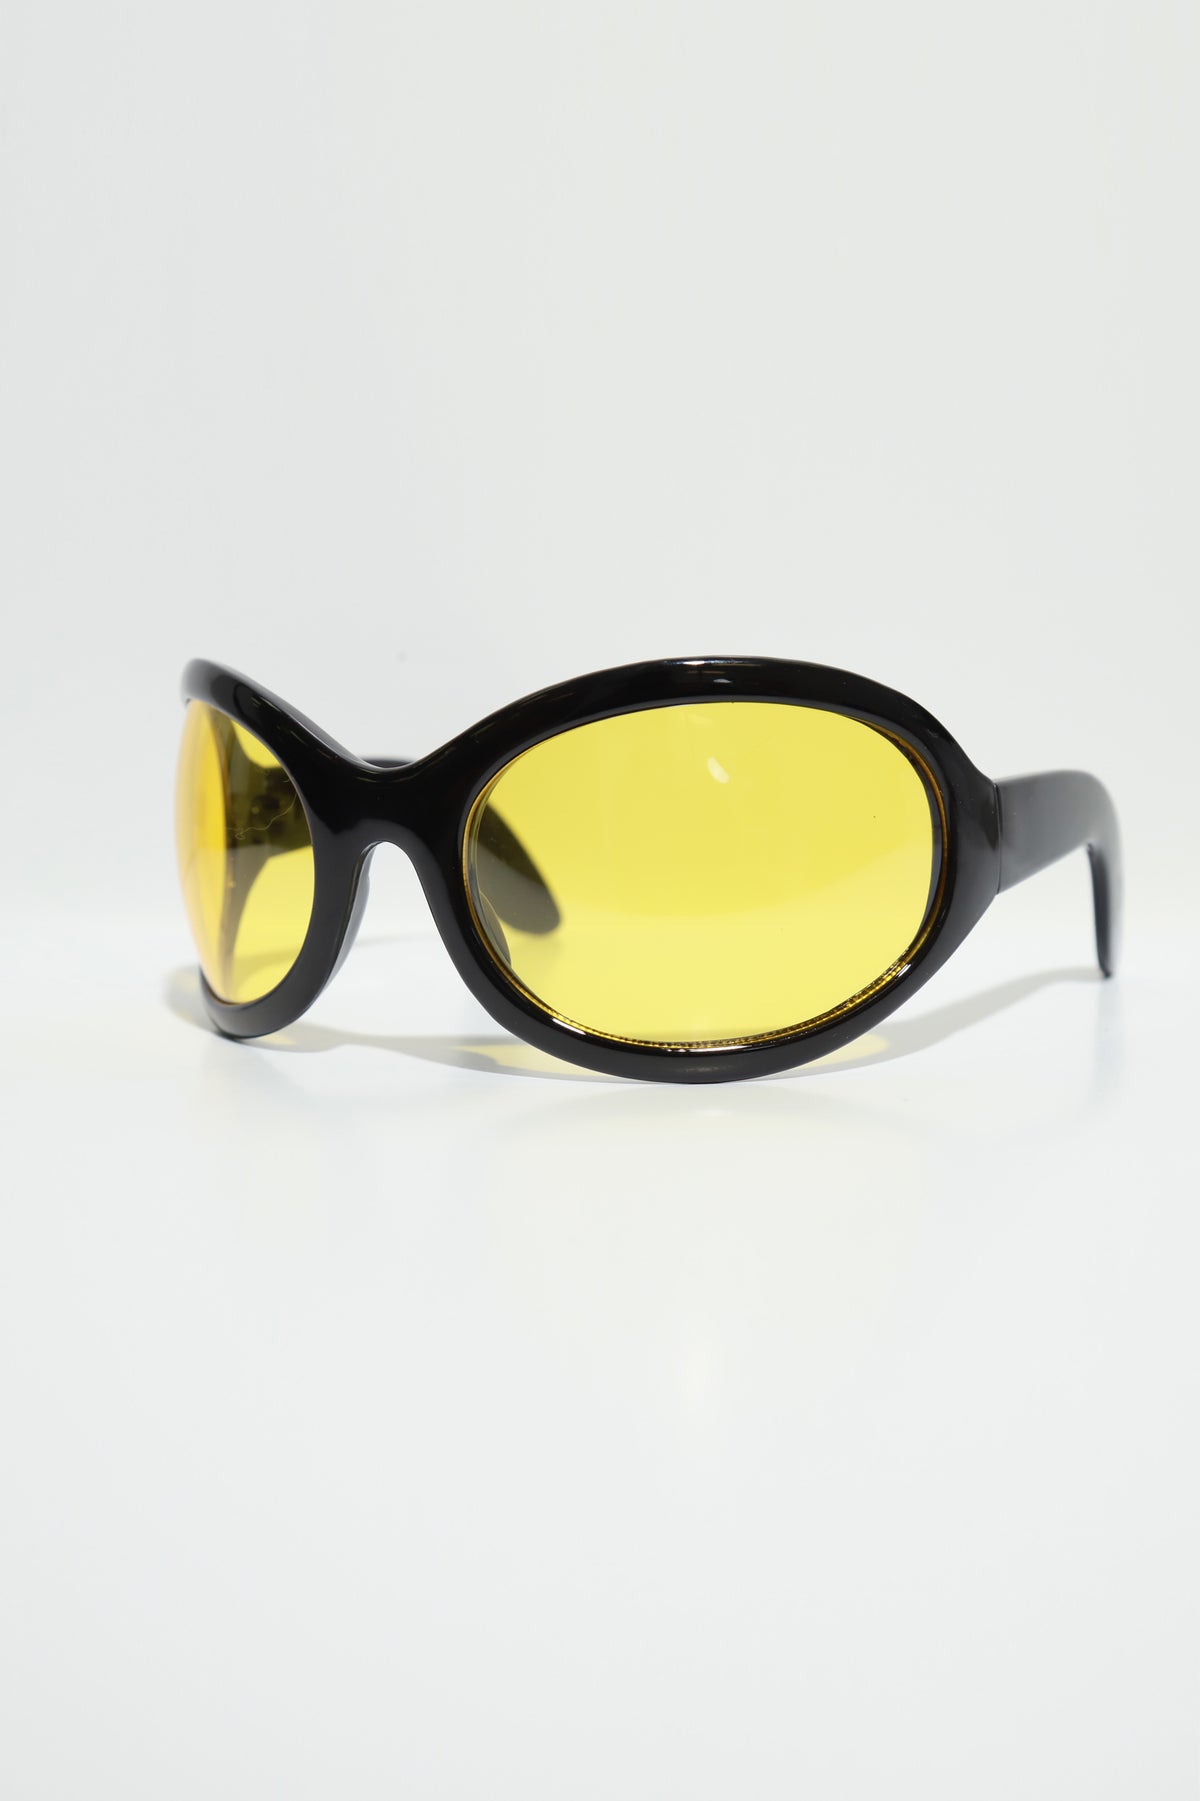 
              Take A Chance Retro Rounded Sunglasses - Black/Yellow - Swank A Posh
            